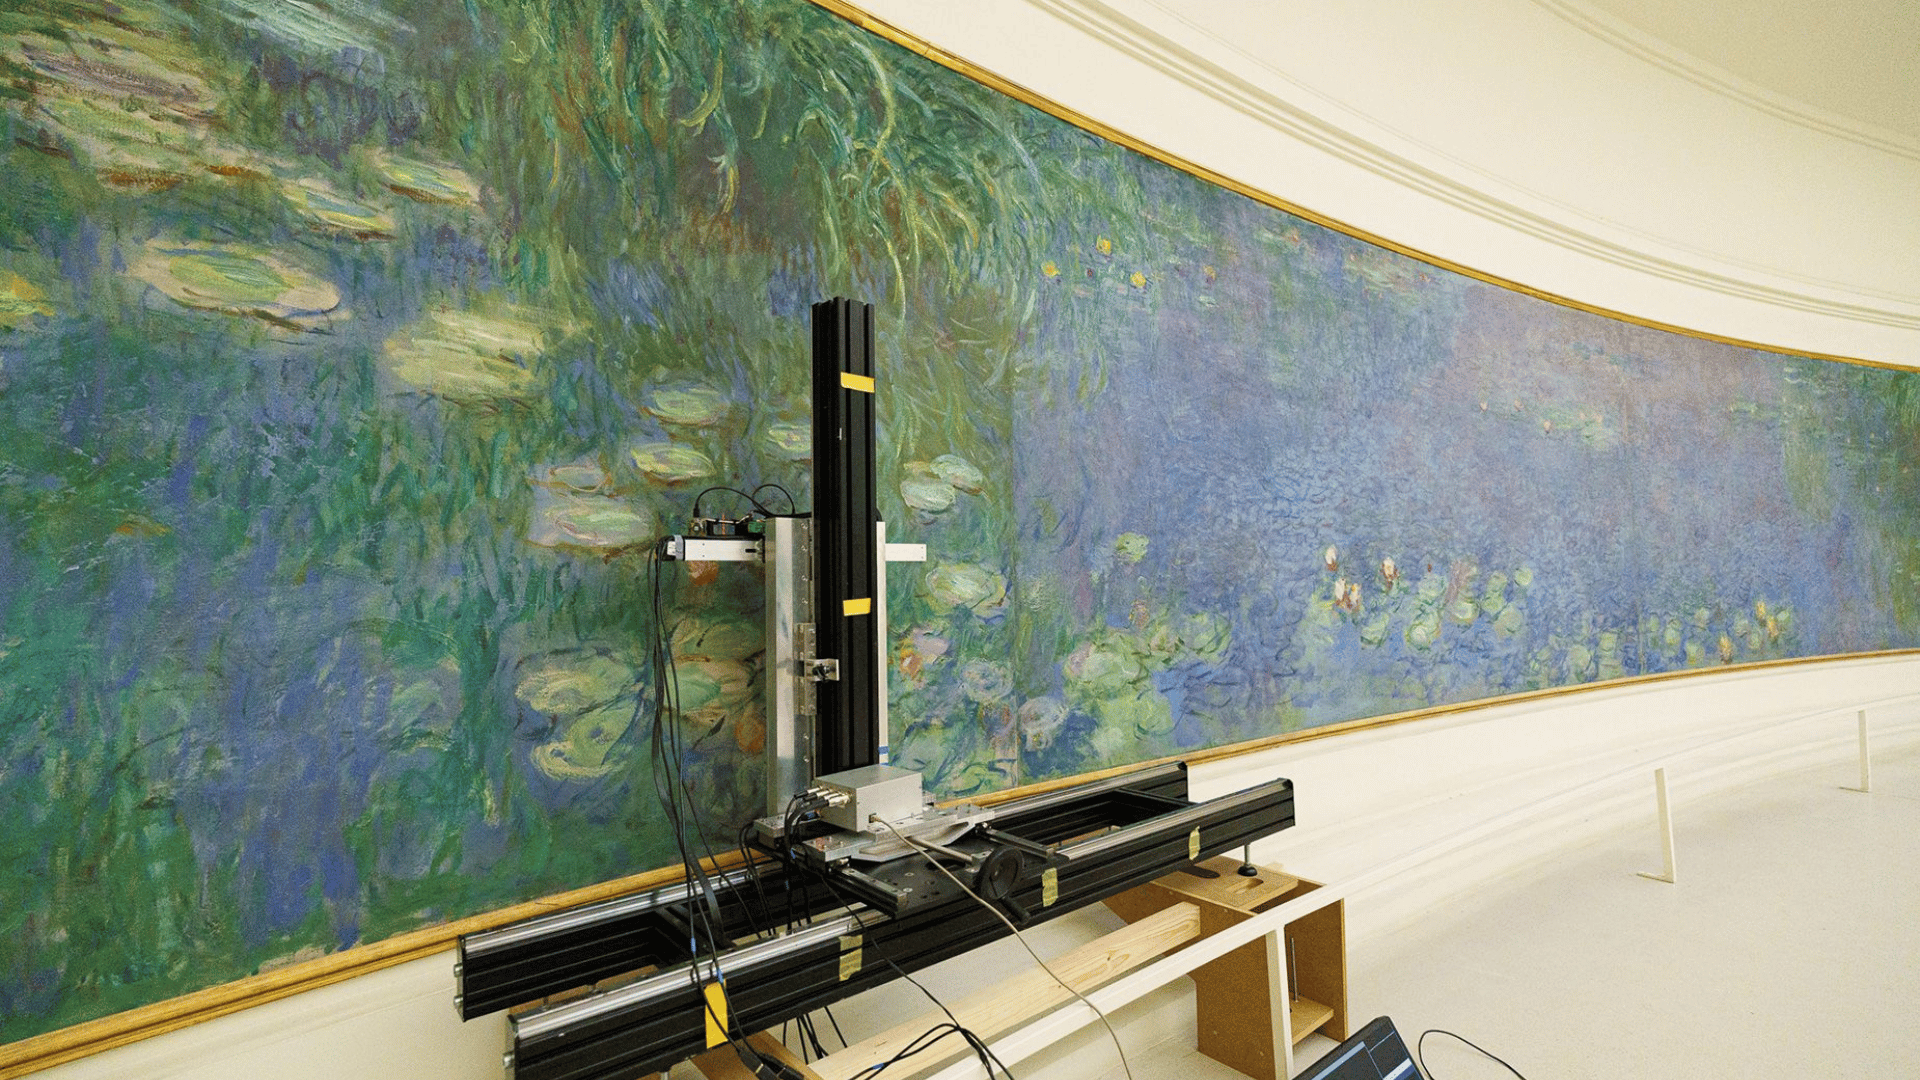 The Austrian company spent a week scanning Claude Monet's Water Liliies murals at the Musée de l'Orangerie in Paris Aurelien Gendron:LITO Masters